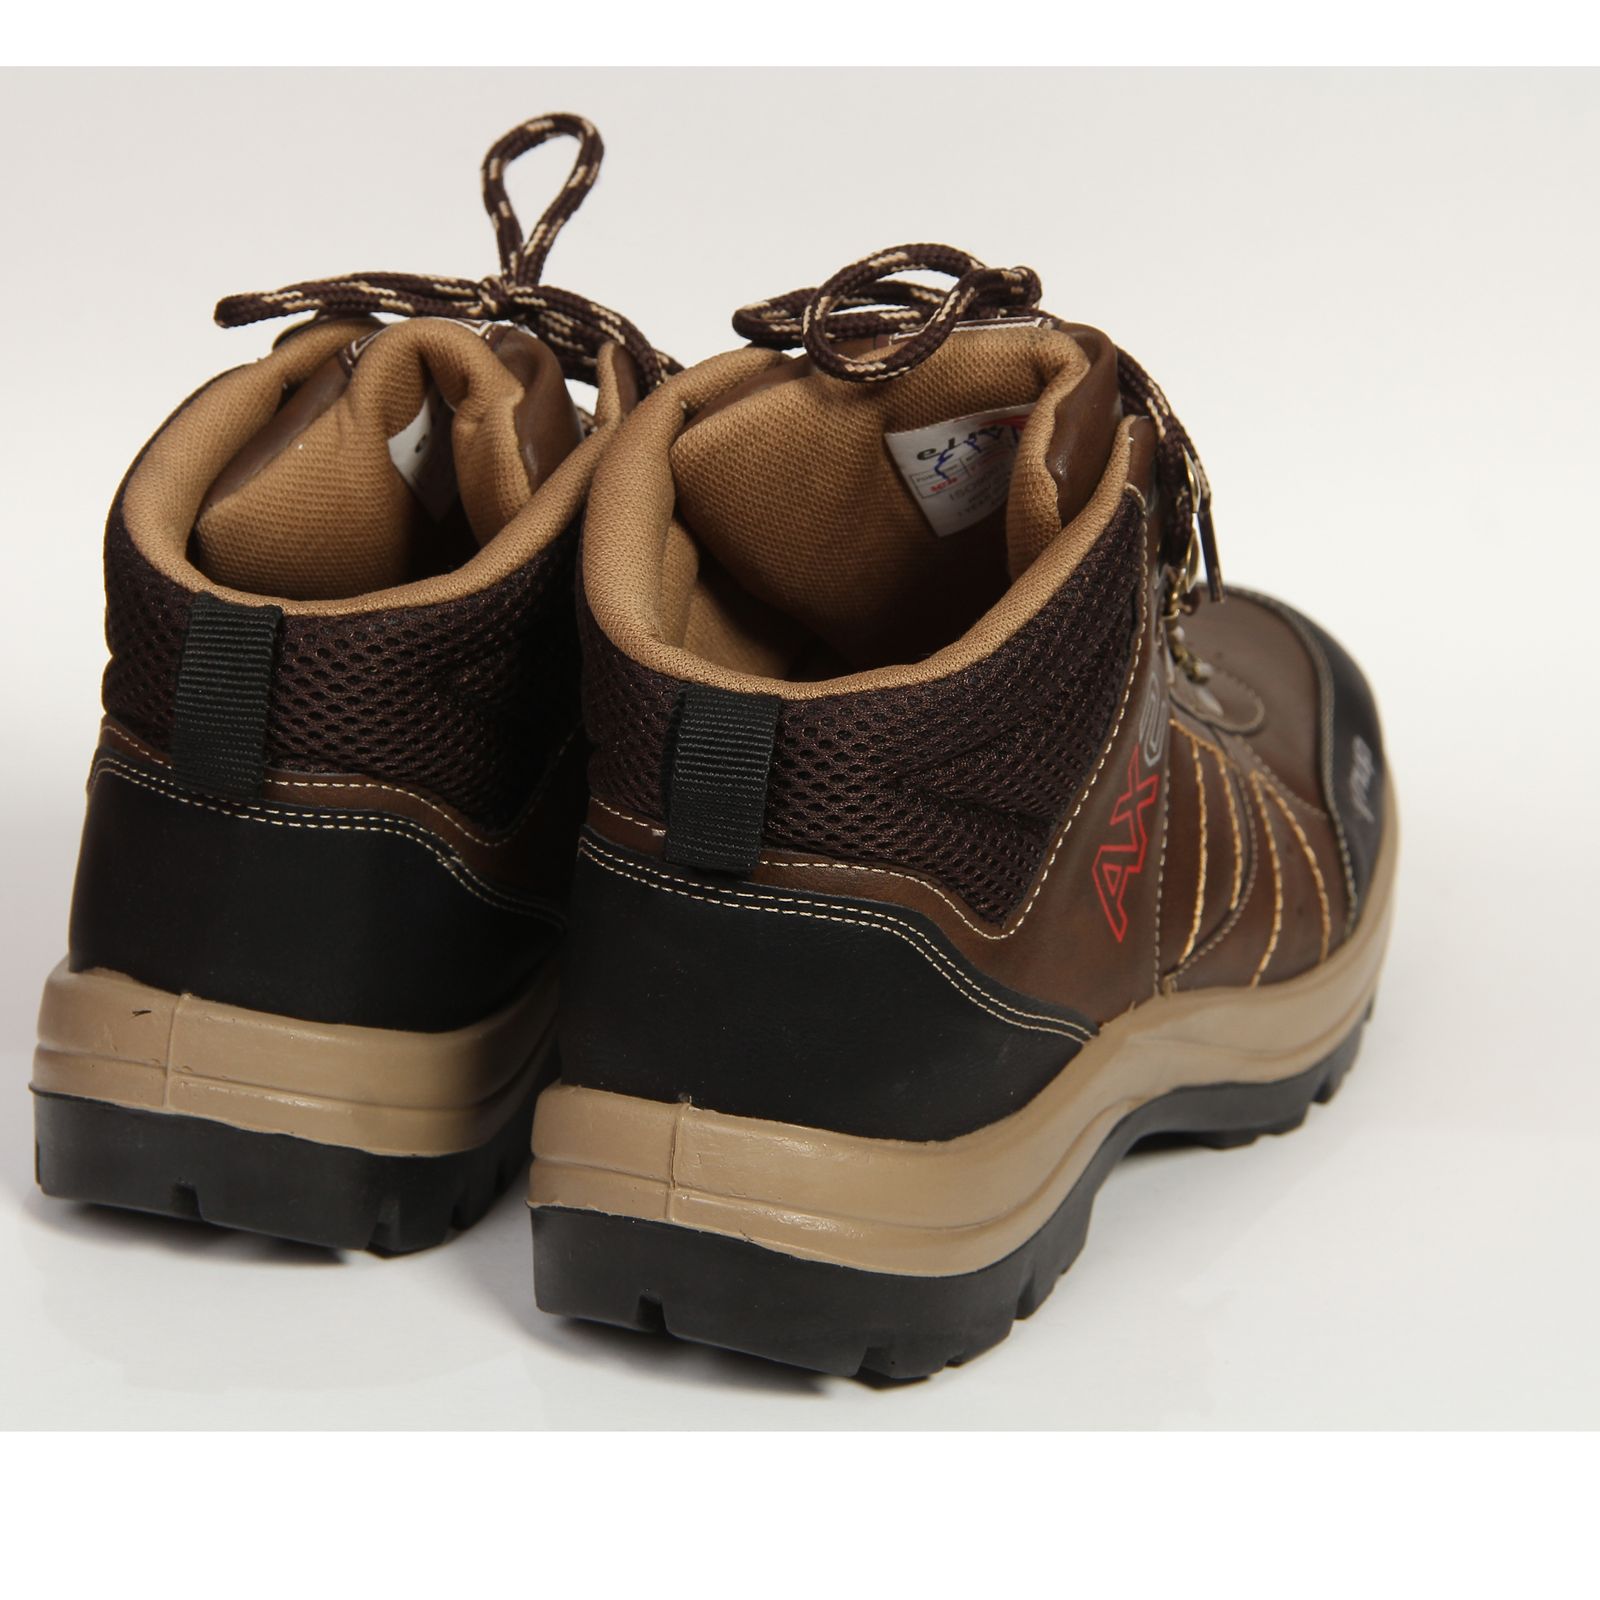 کفش کوهنوردی ای ال ام مدل ماکان الهام کد 3060052 -  - 4